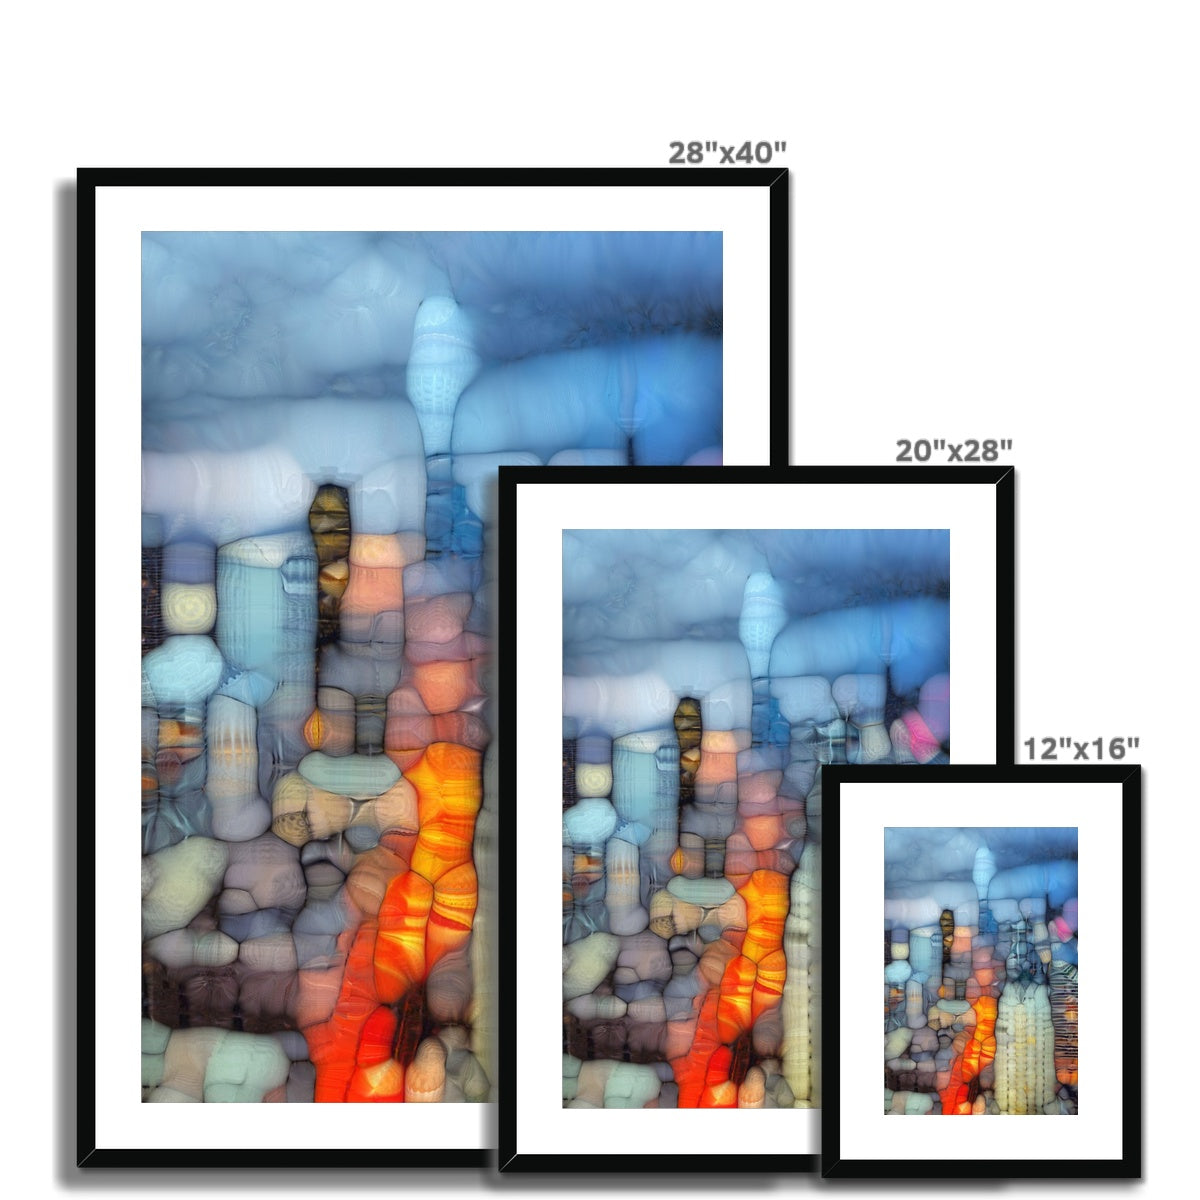 Blob City I Framed & Mounted Print